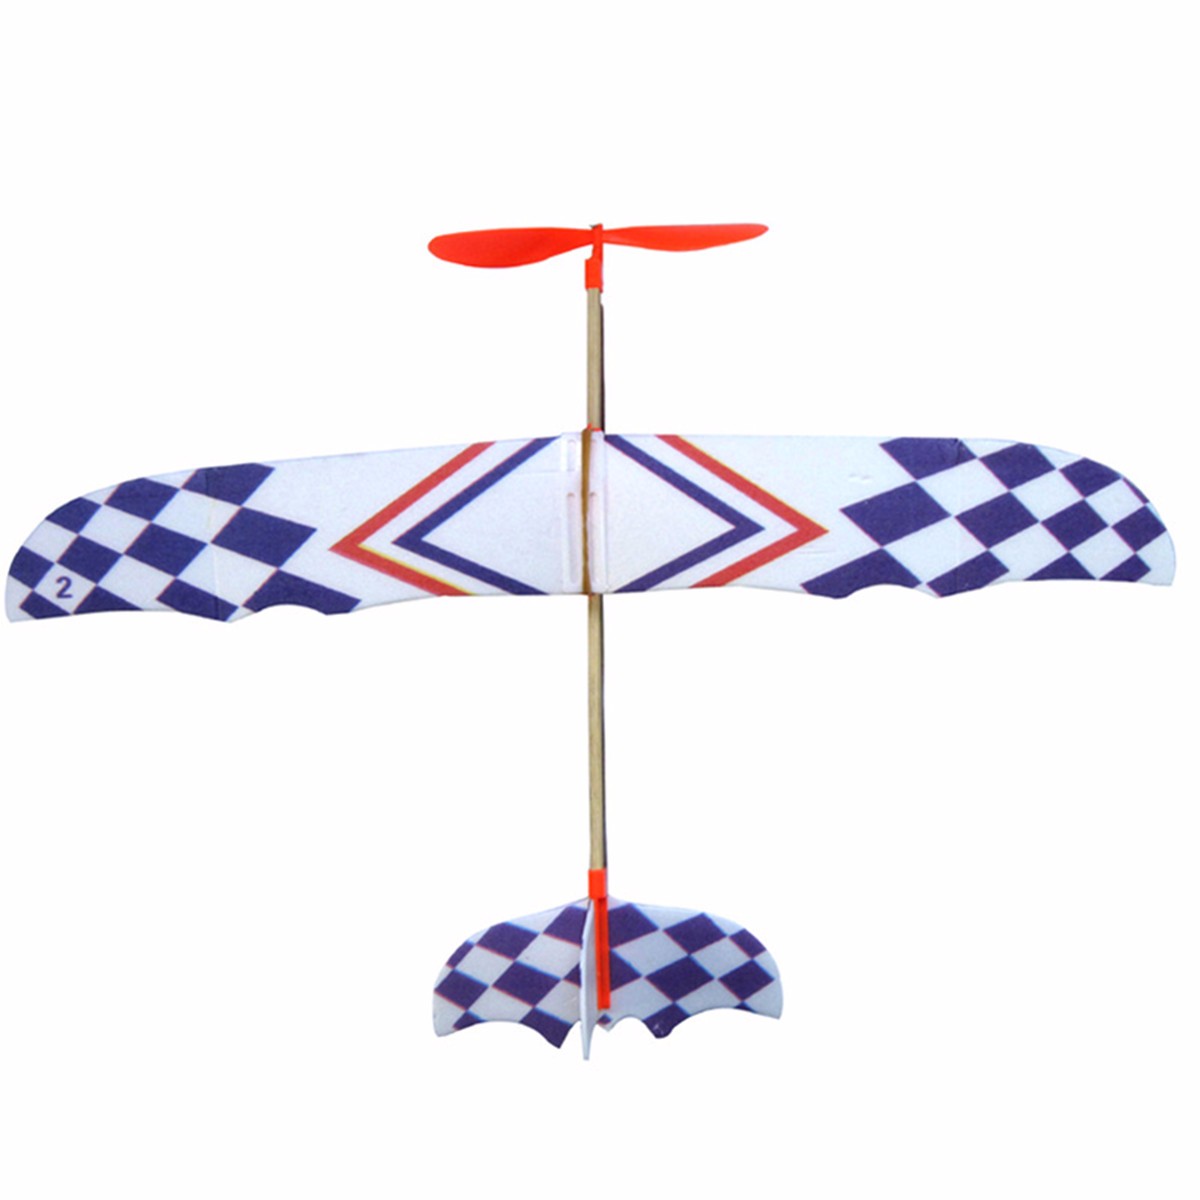 5PCS-DIY-Foam-Plane-Elastic-Rubber-Band-Powered-Aircraft-Kit-Model-Toy-1125454